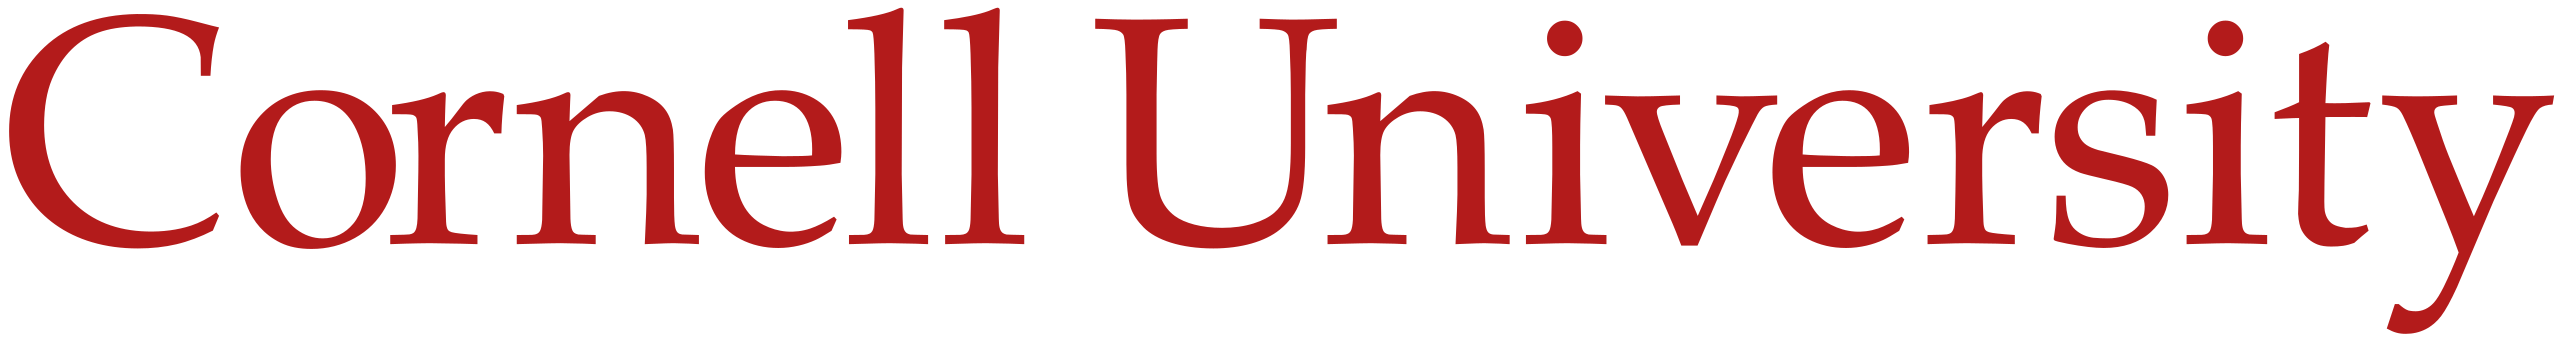 2560px-Cornell_University_logo.svg